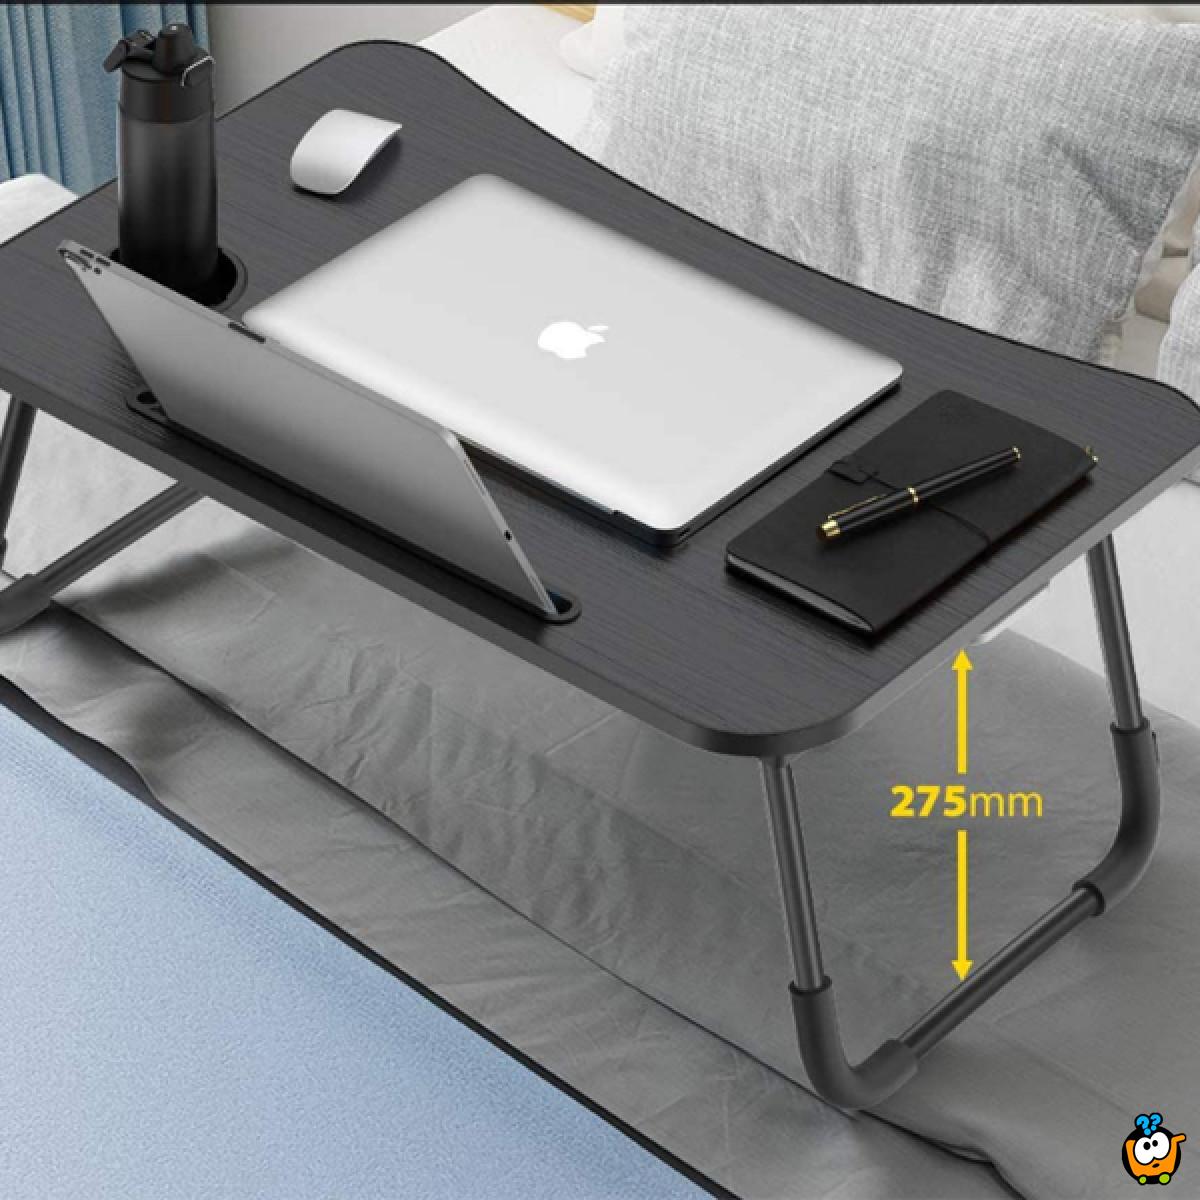 Moderan rasklopivi sto za rad iz kreveta ili fotelje